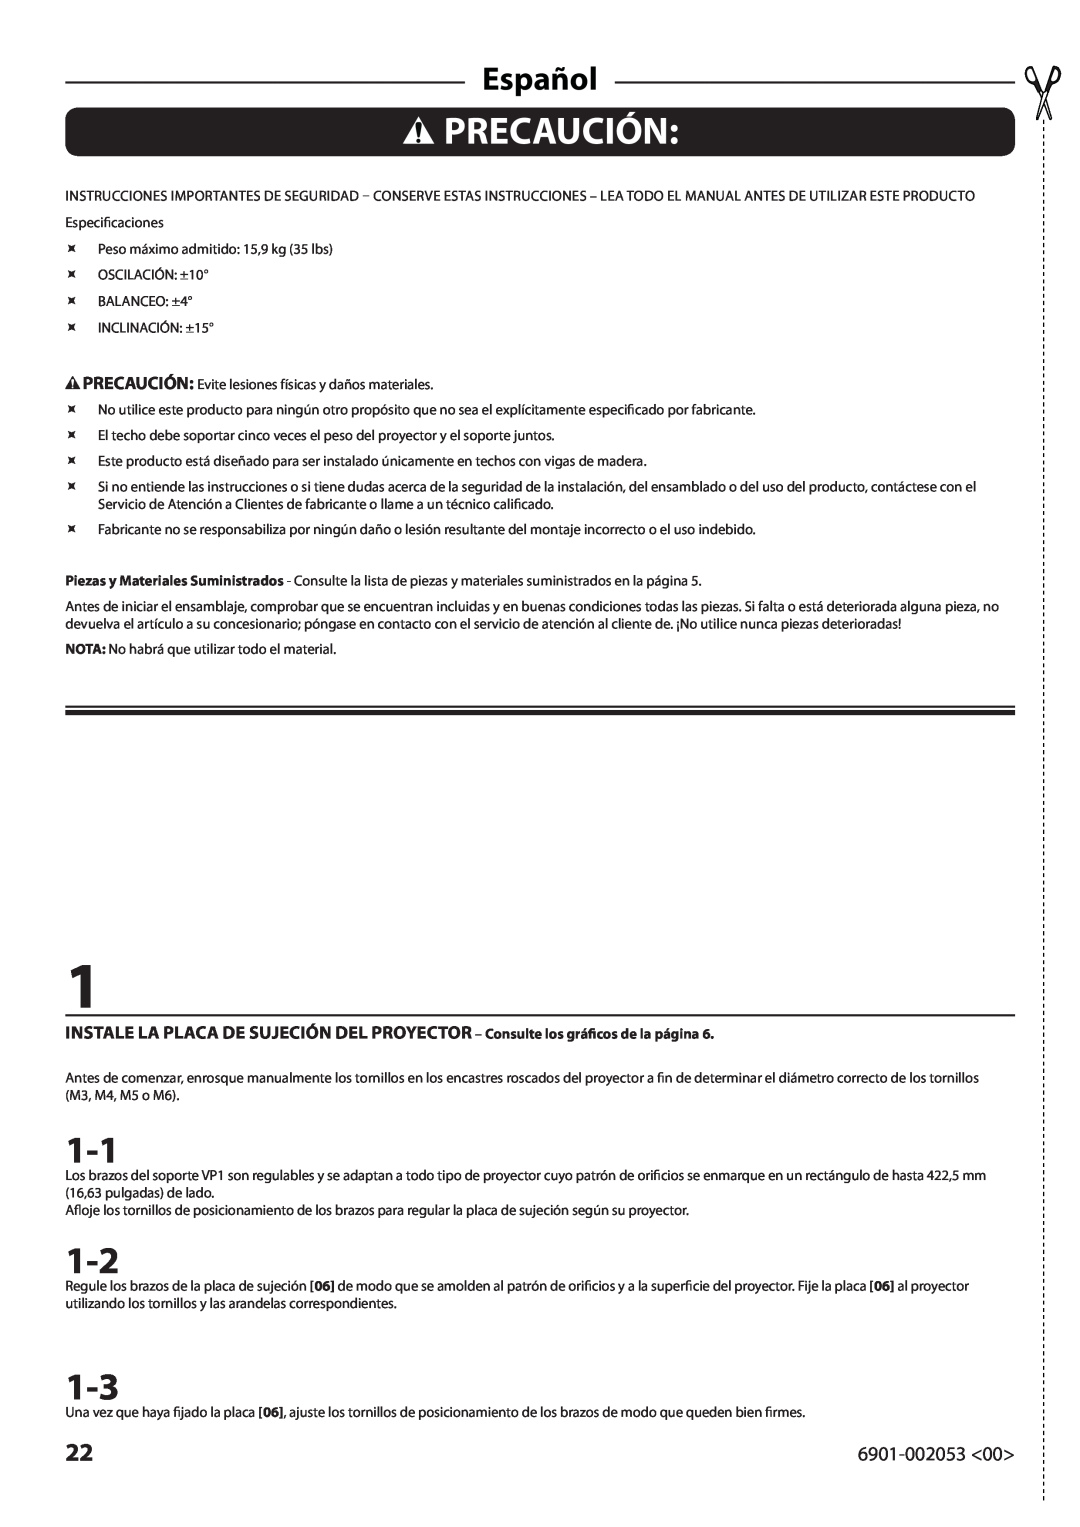 Sanus Systems VP1 manual Precaución, Español 